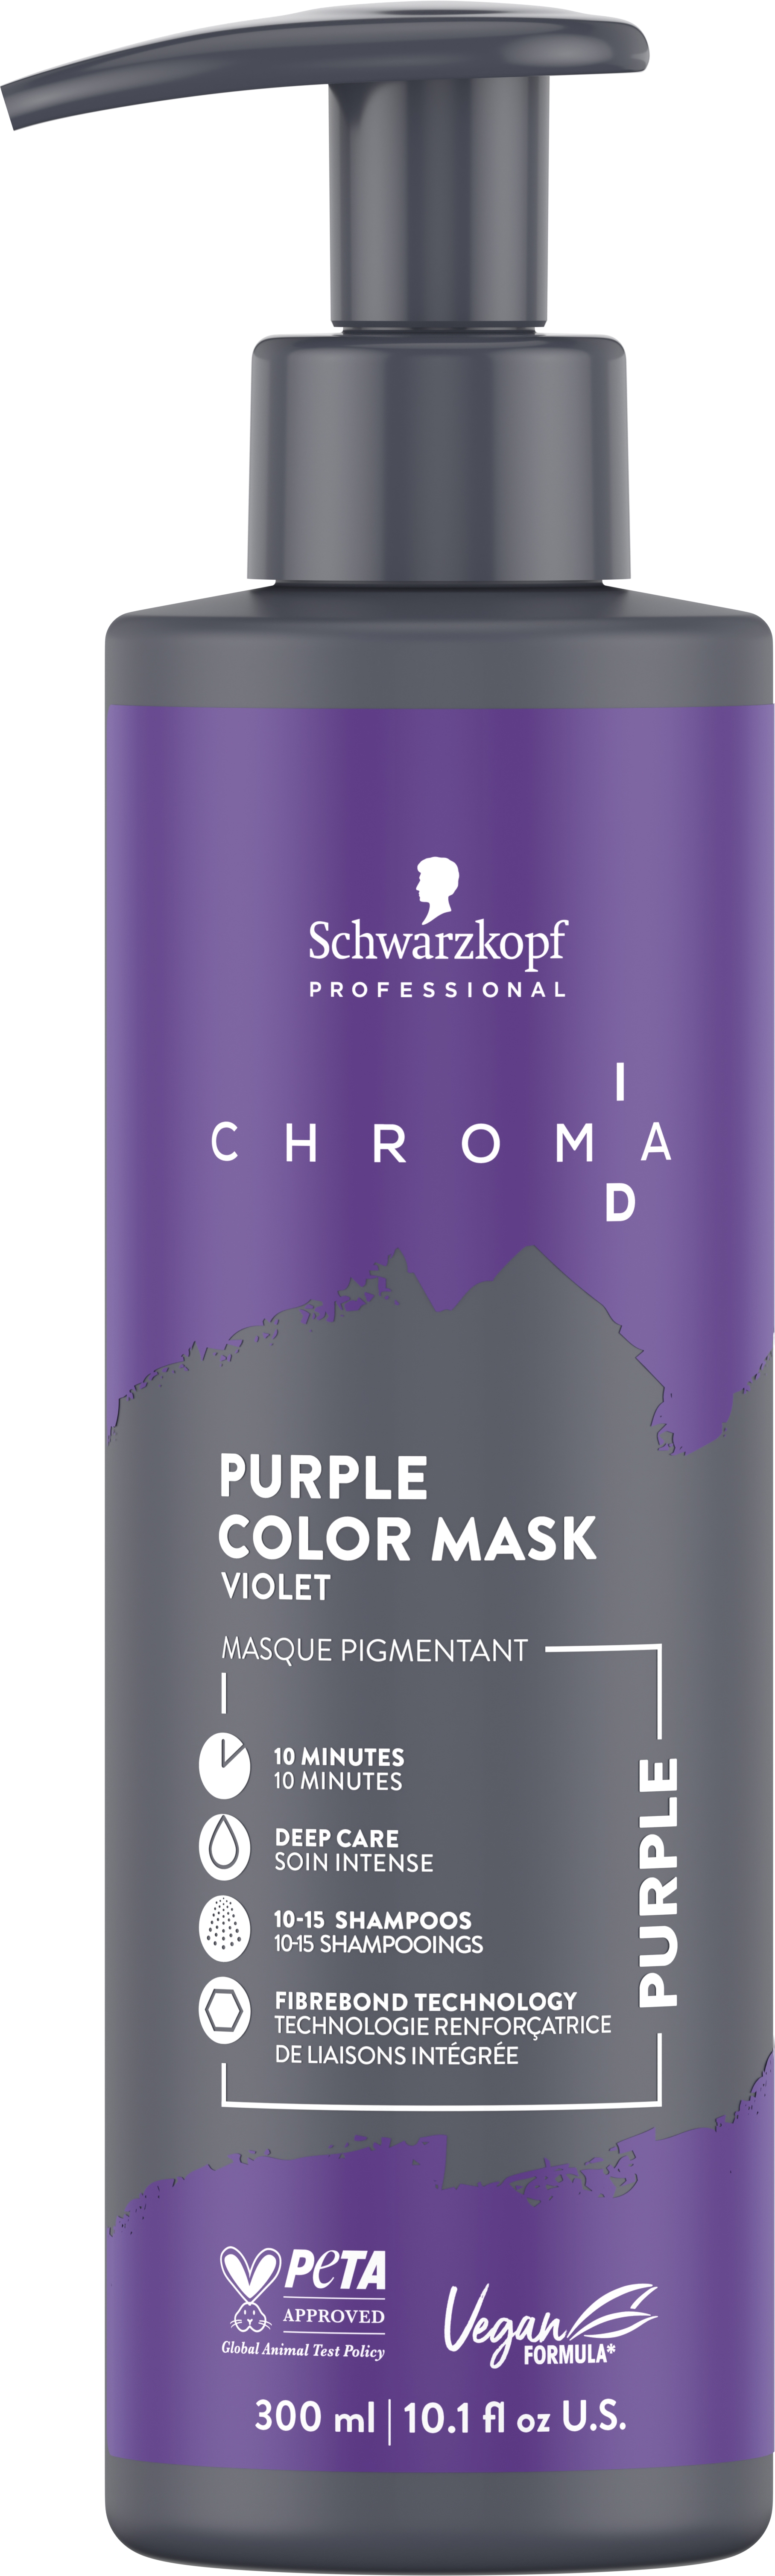 Produktbild von Chroma ID - Bonding Color Mask Purple